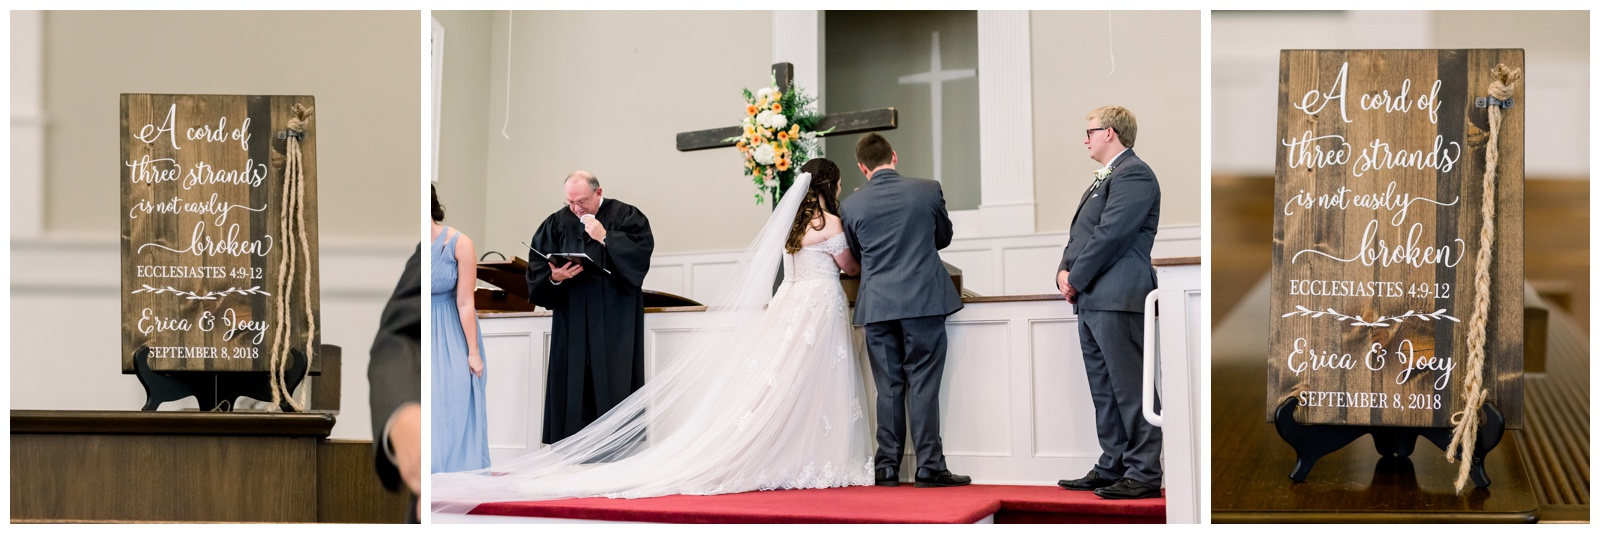 bride and groom tying a cord of three strands, atlanta ga wedding photographer